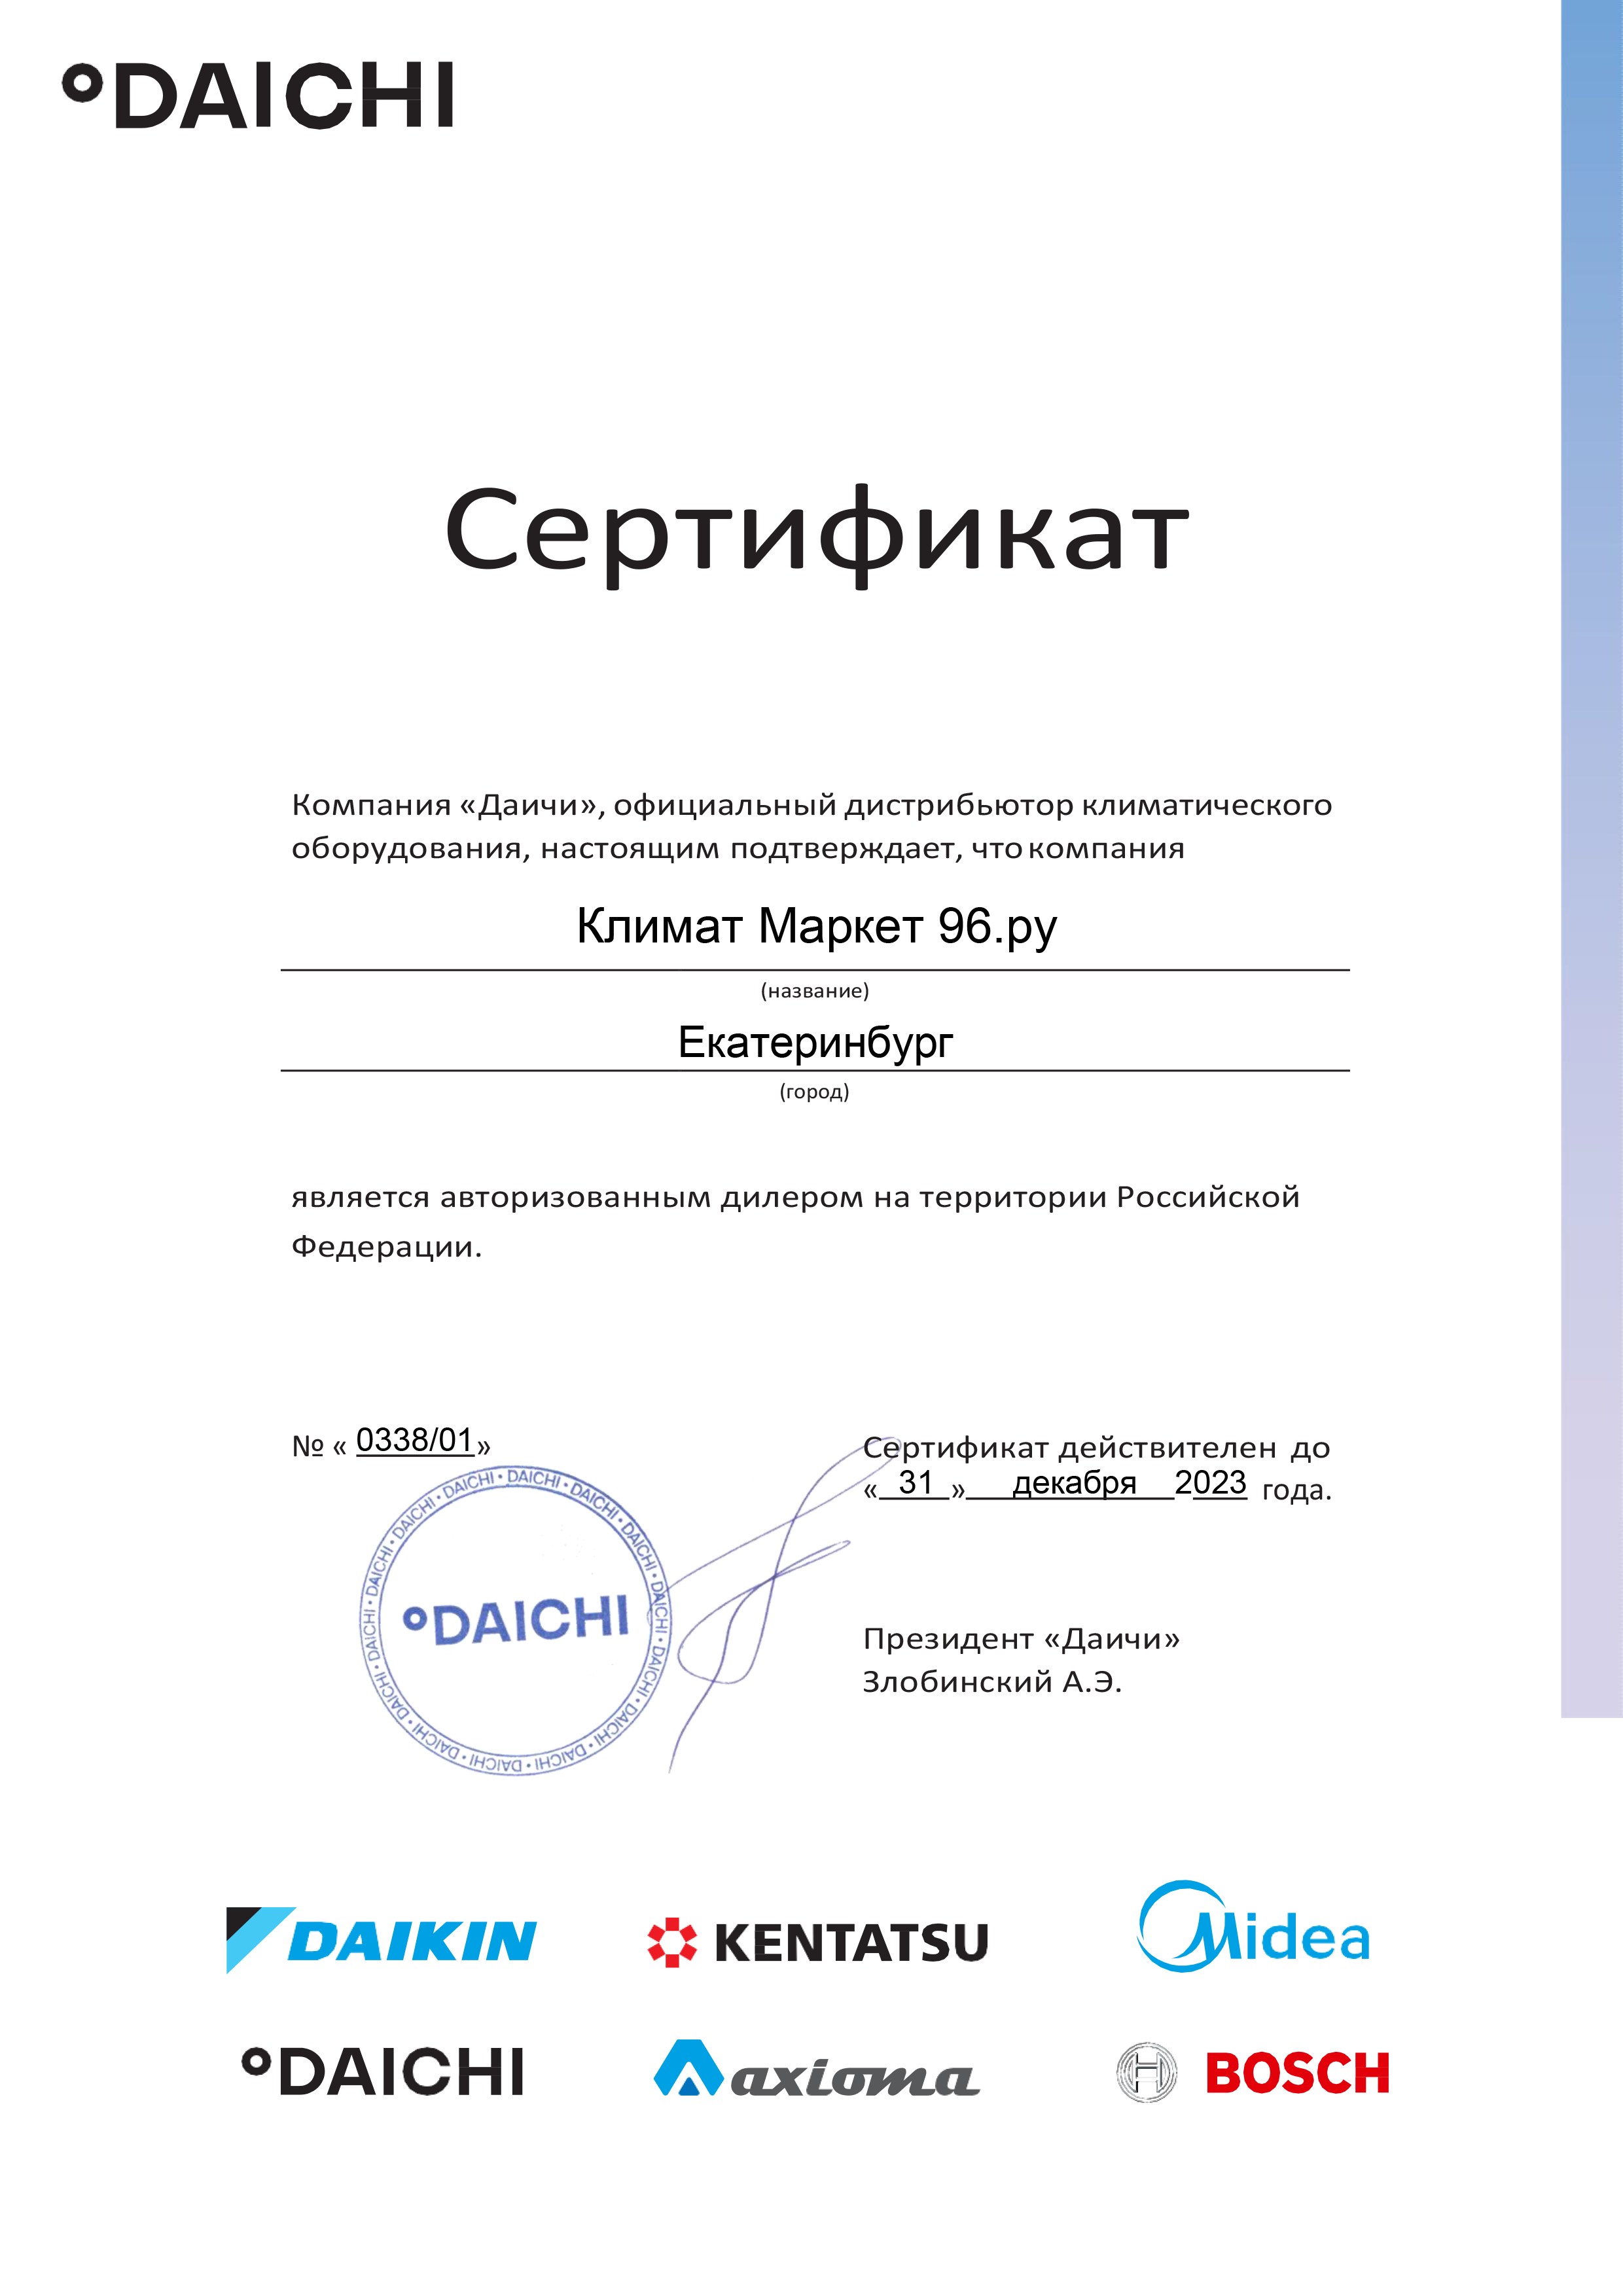 daichi-km96 Kondicioner Kentatsu KSGU26HZAN1/KSRU26HZAN1 kypit v Ekaterinbyrge v internet-magazine KlimatMarket96.ry Сертификат дилера